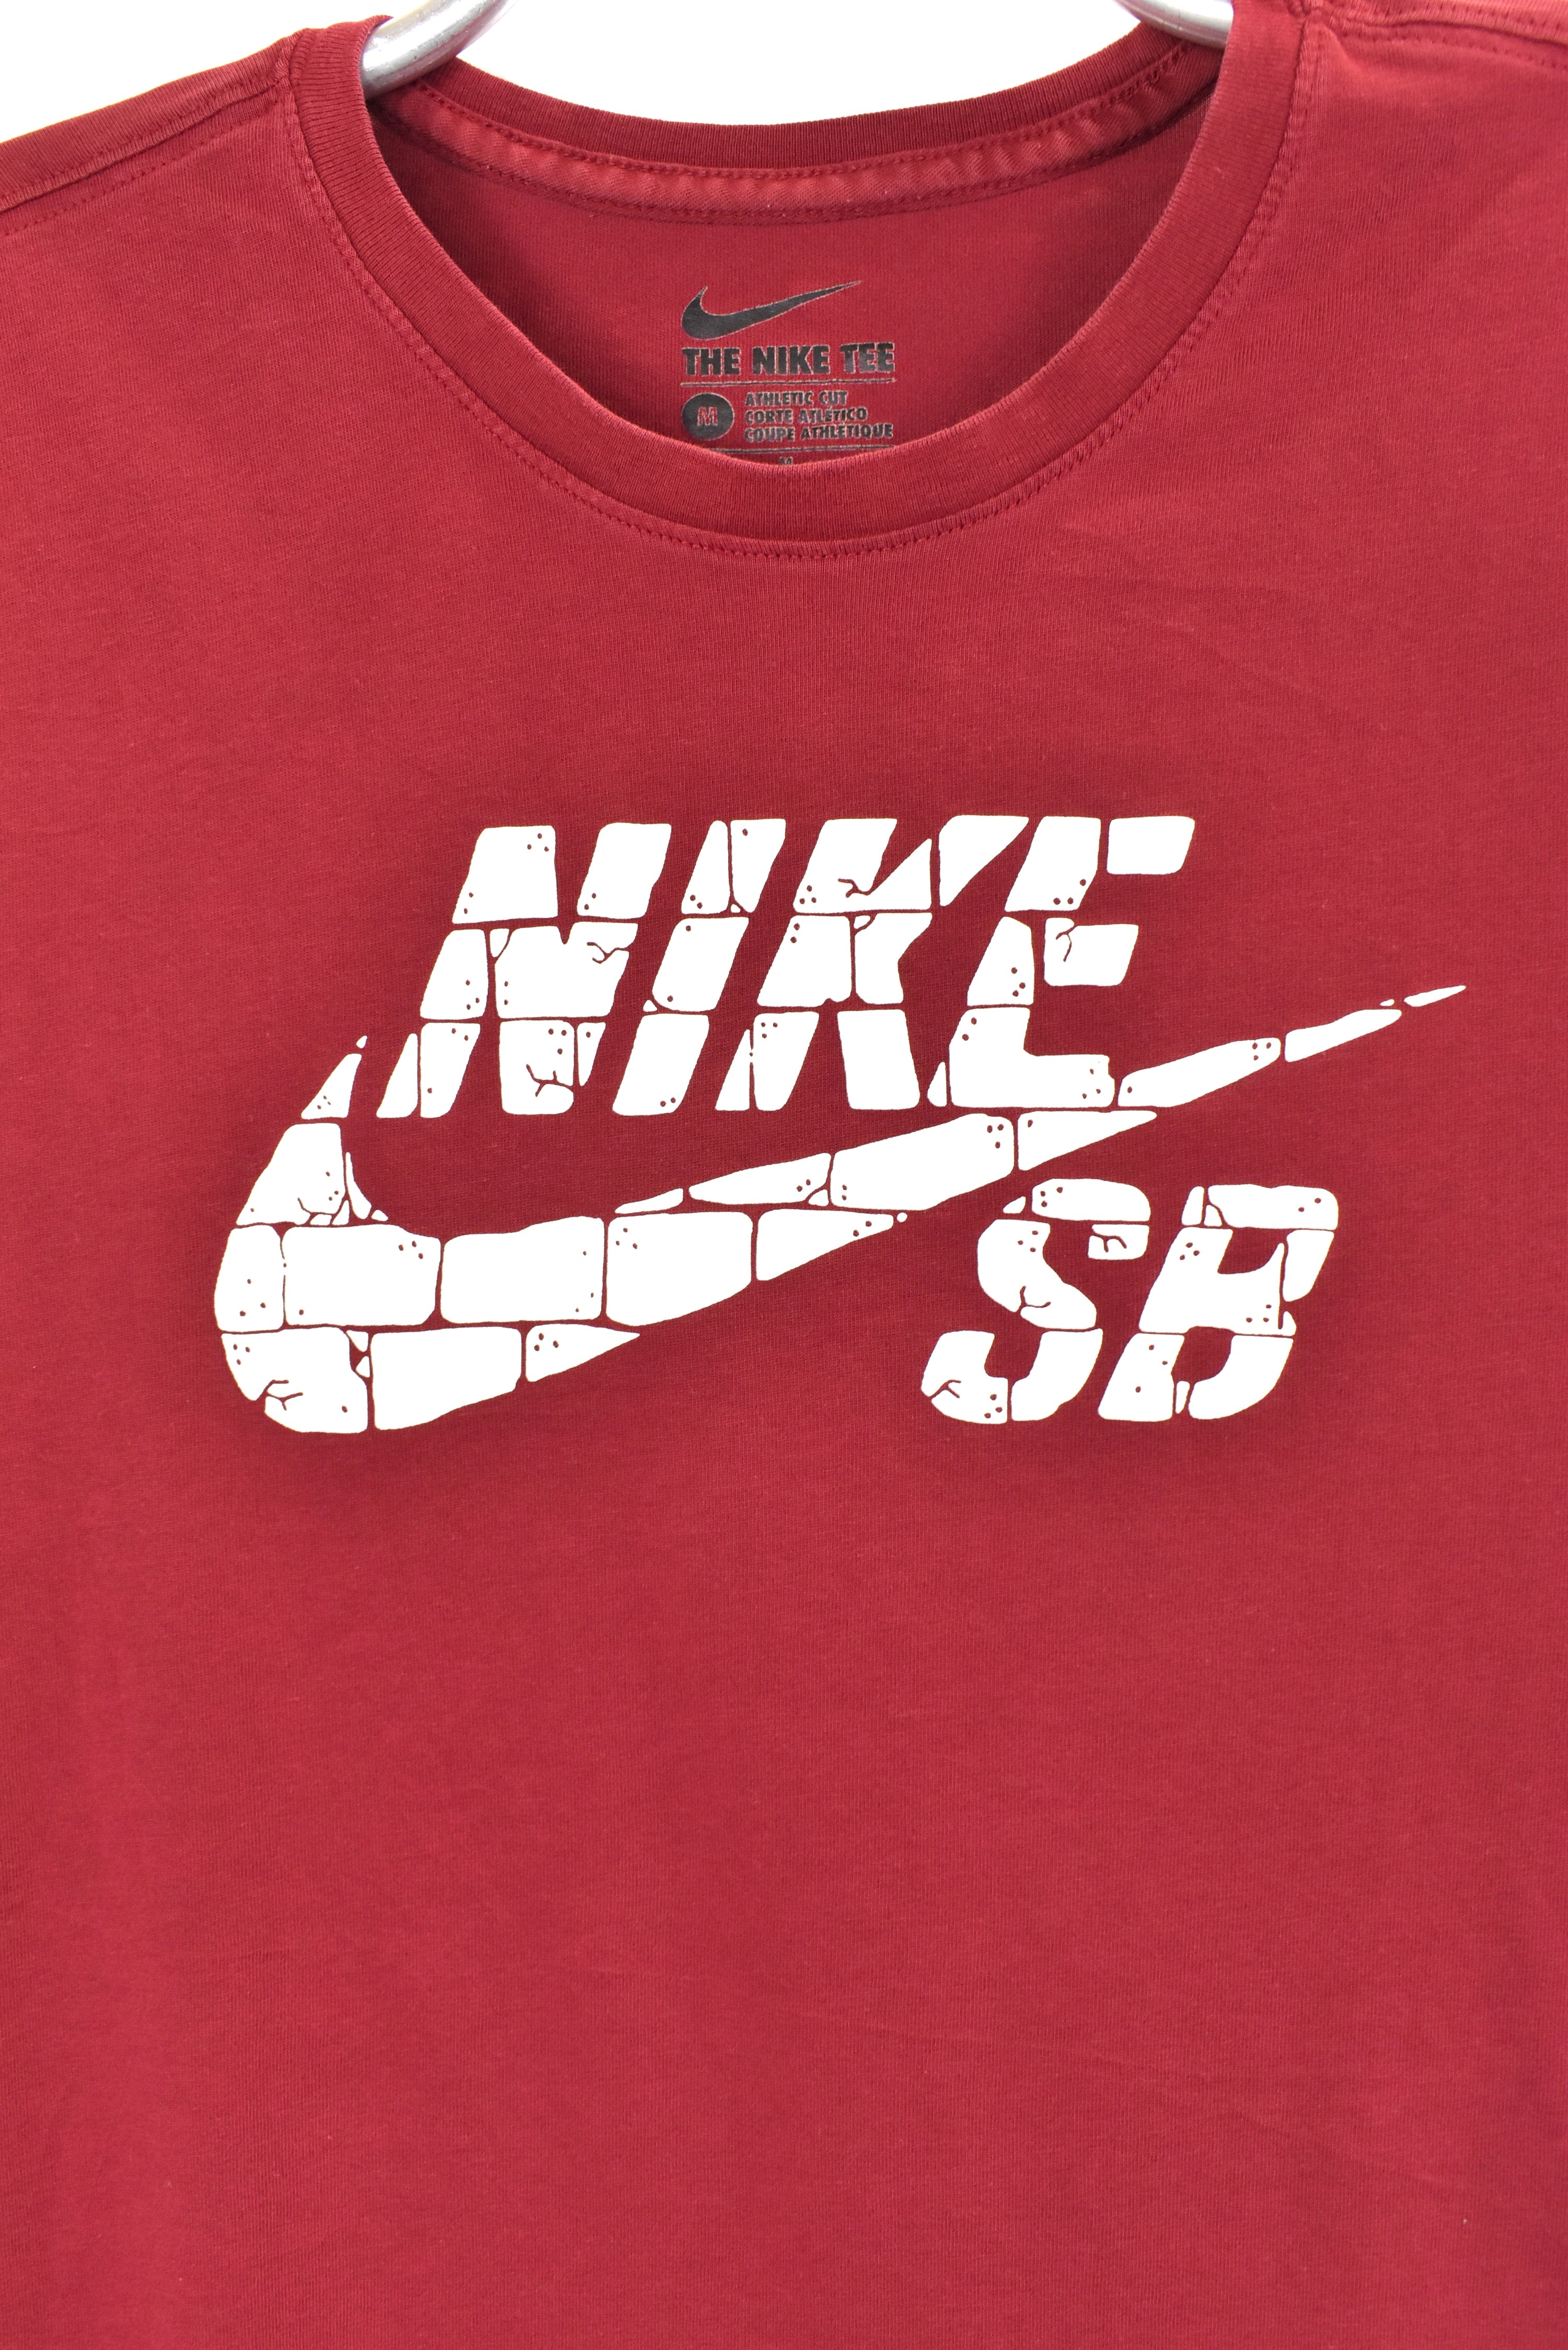 Modern Nike Dri-Fit shirt, burgundy graphic tee - AU Medium NIKE